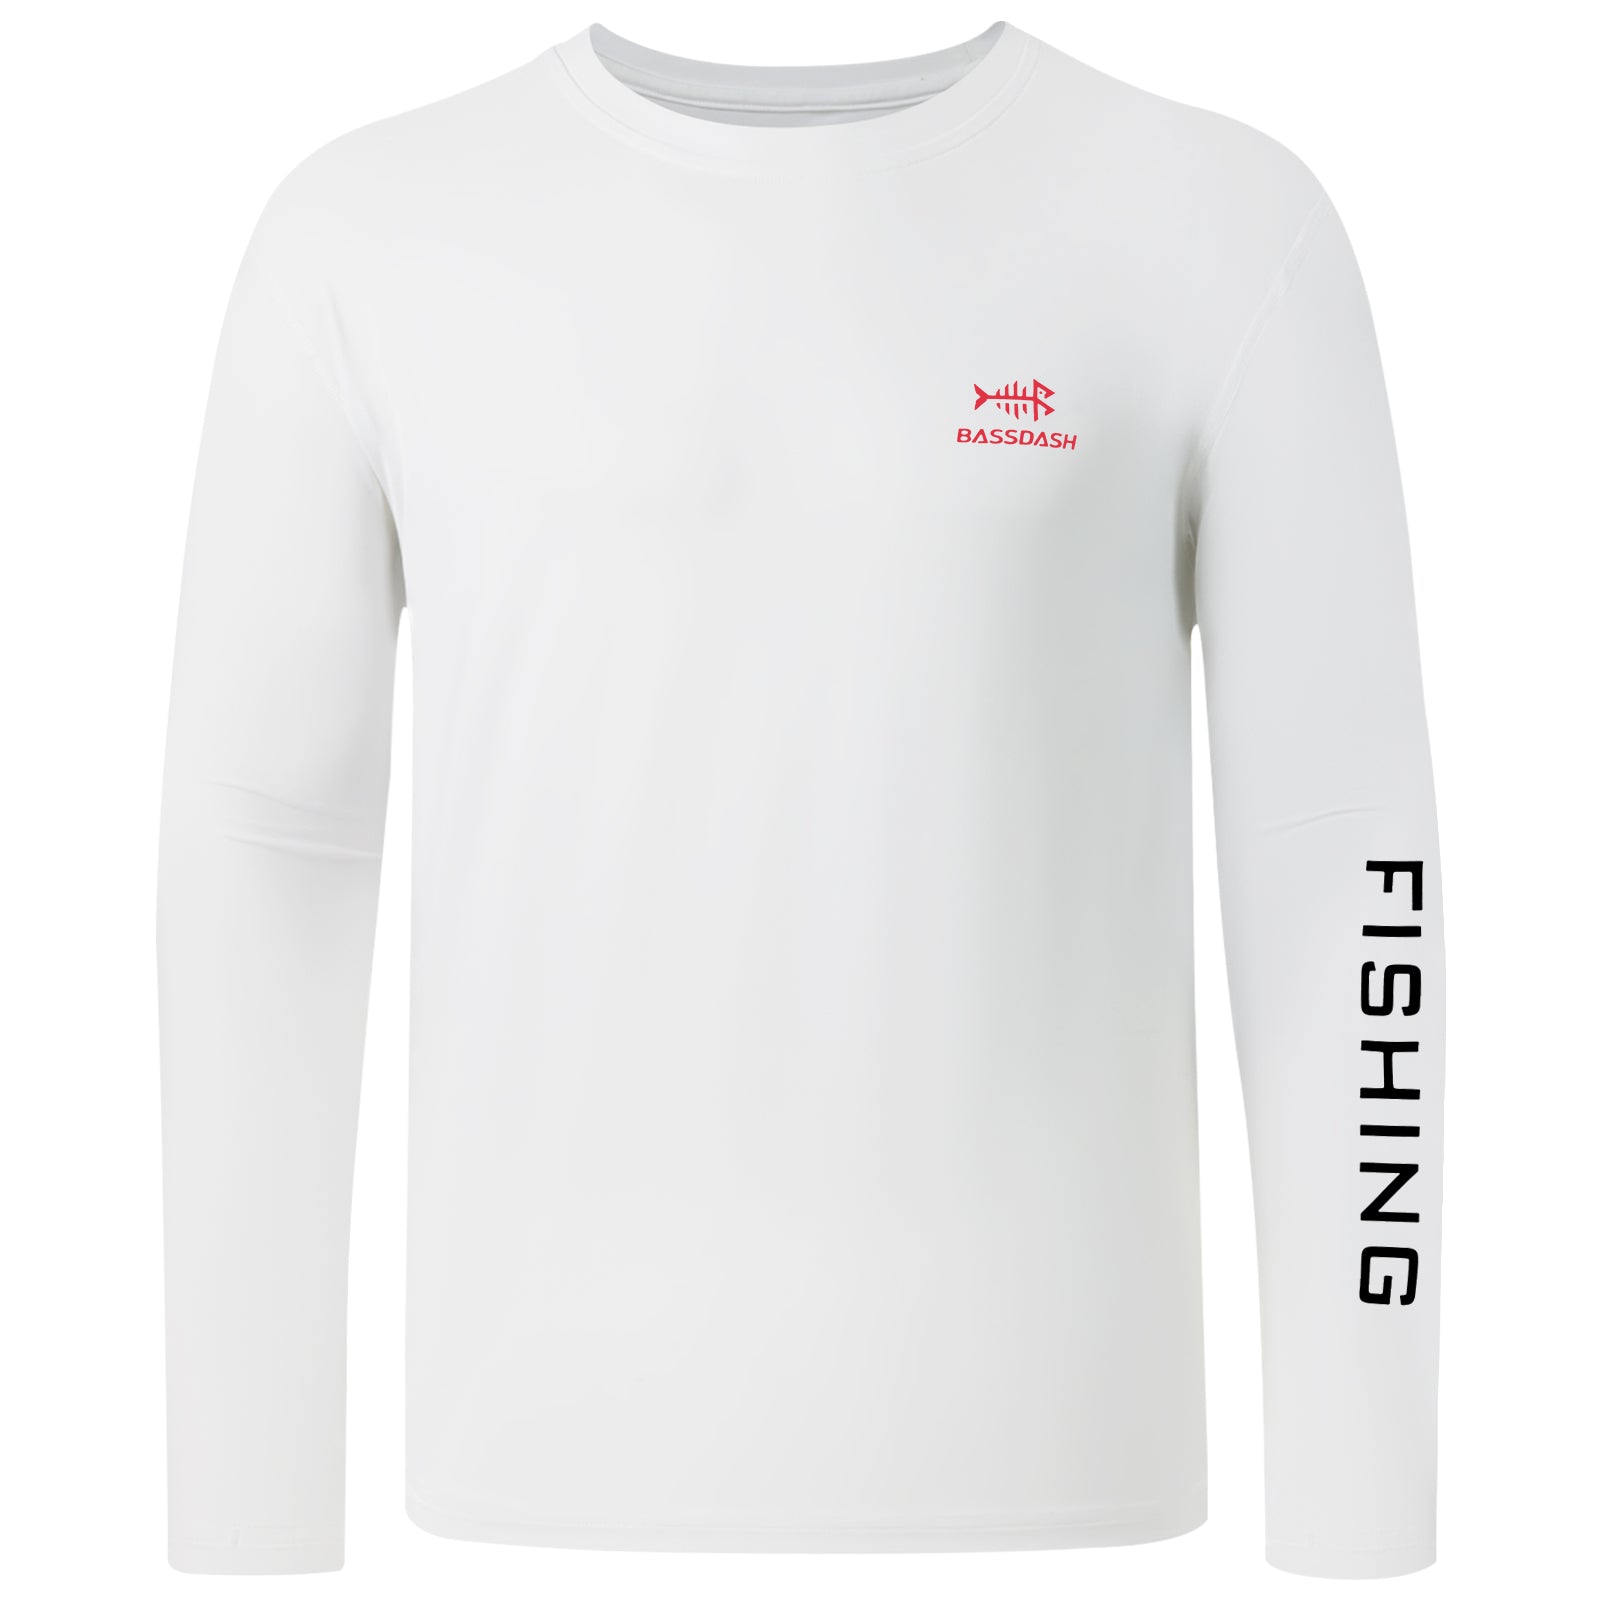 BASSDASH Fishing T Shirts for Men UV Sun Protection UPF 50+ Long Sleeve Tee  T-Shirt